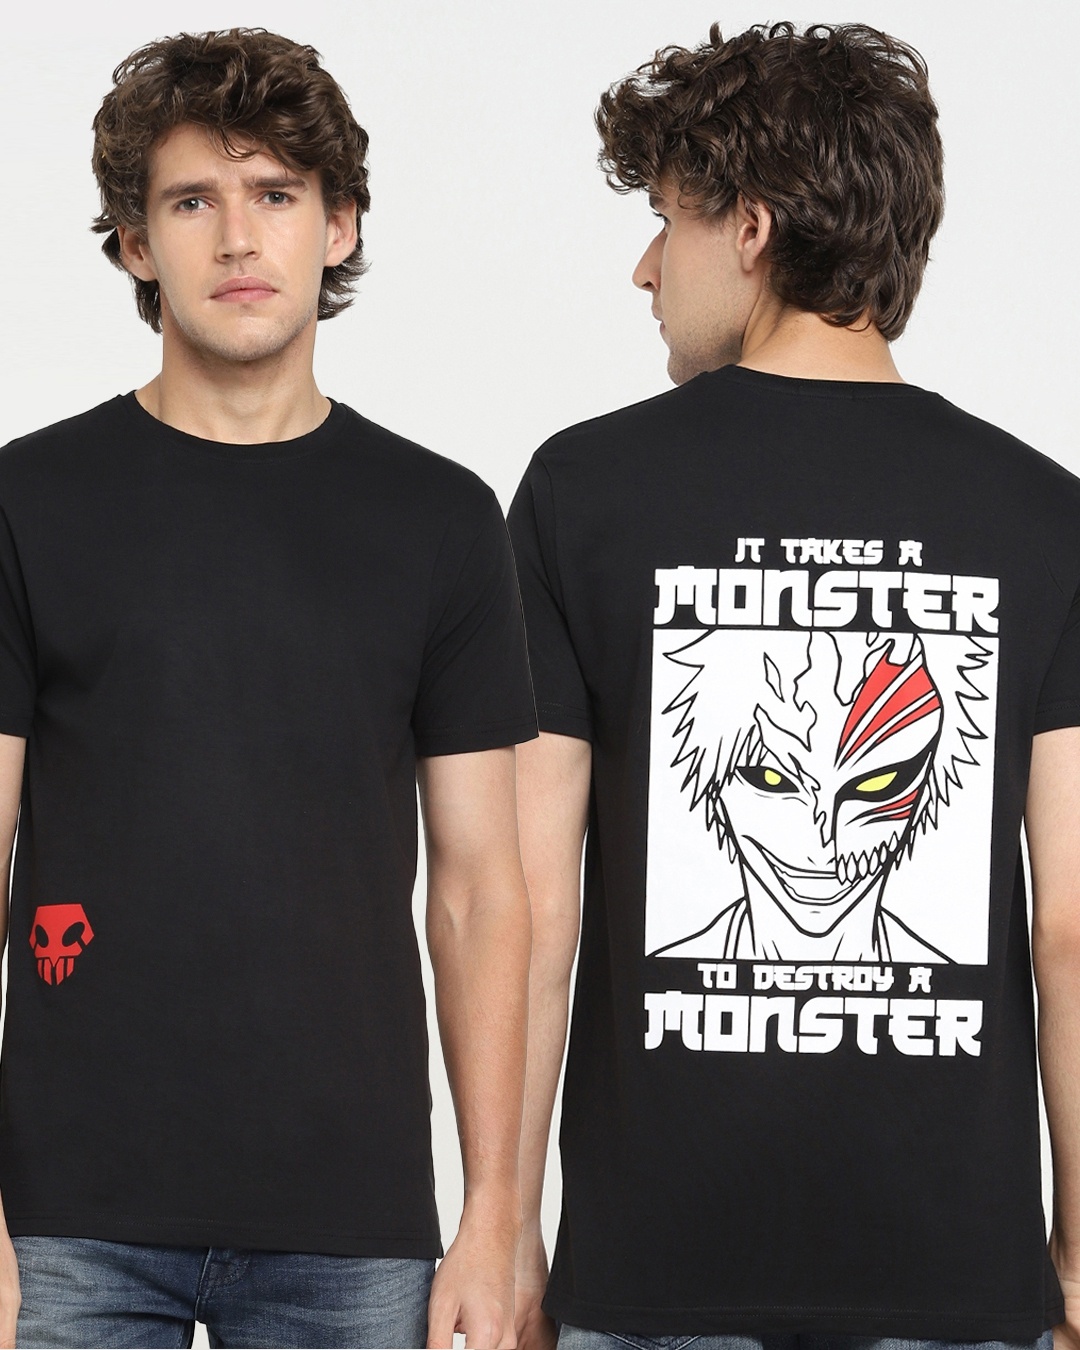 Johan Liebert is the titular monster and the main antagonist of the MONSTER  anime  Monster is a Japanese manga series writte  T shirt Shirts  Classic t shirts